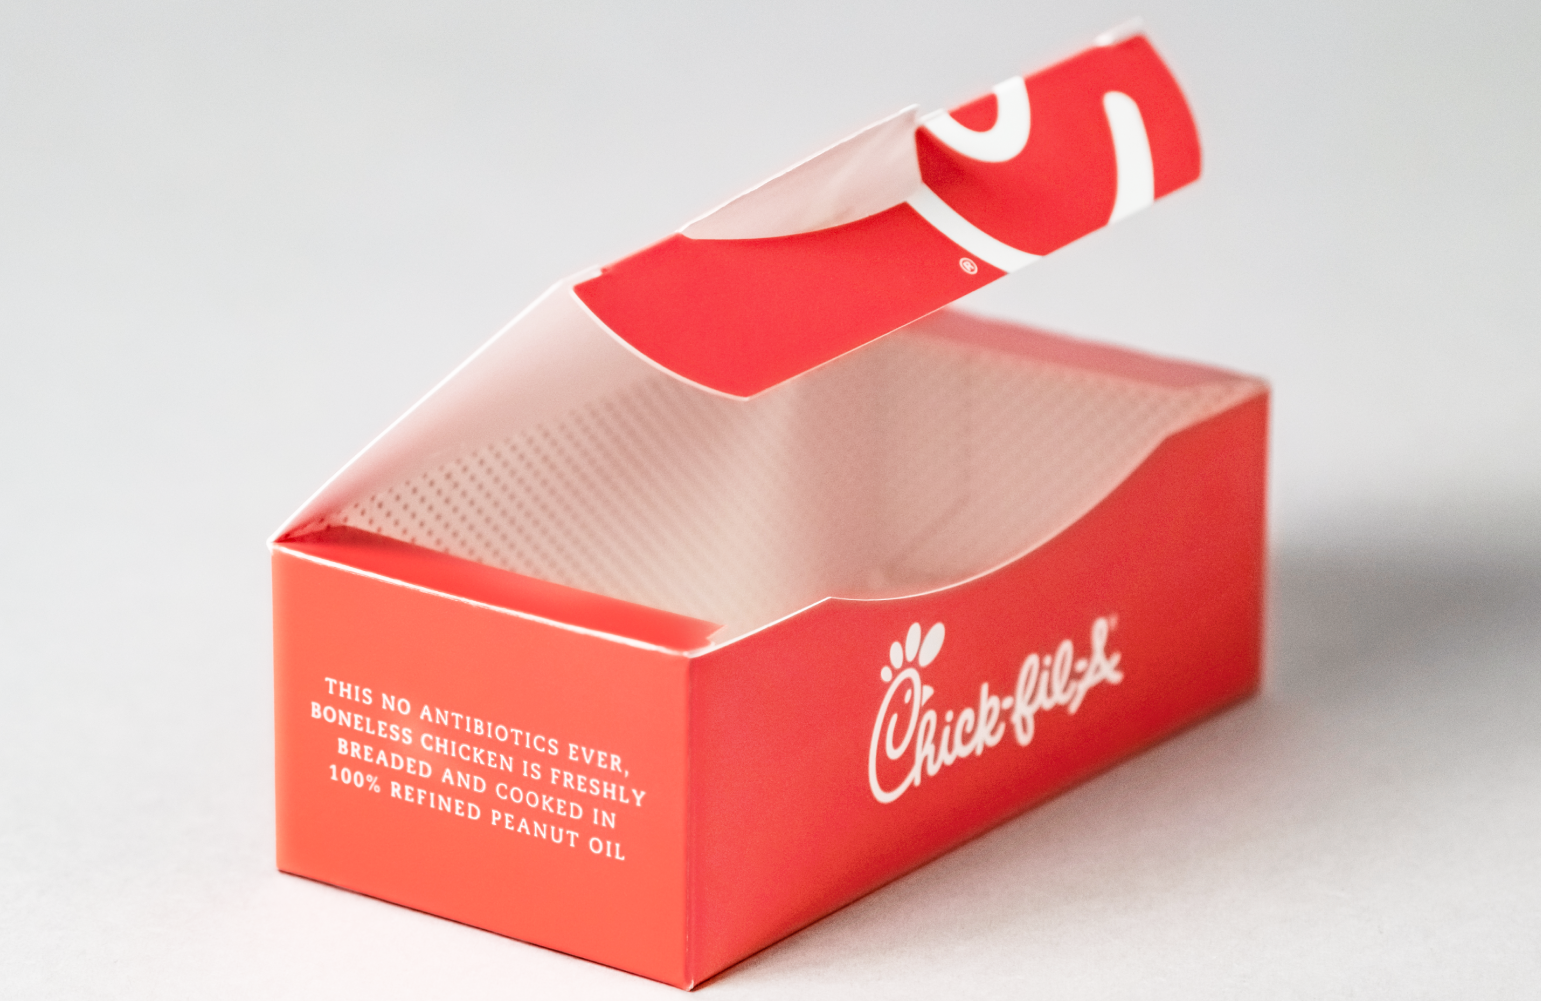 Chick-fil-A nugget box